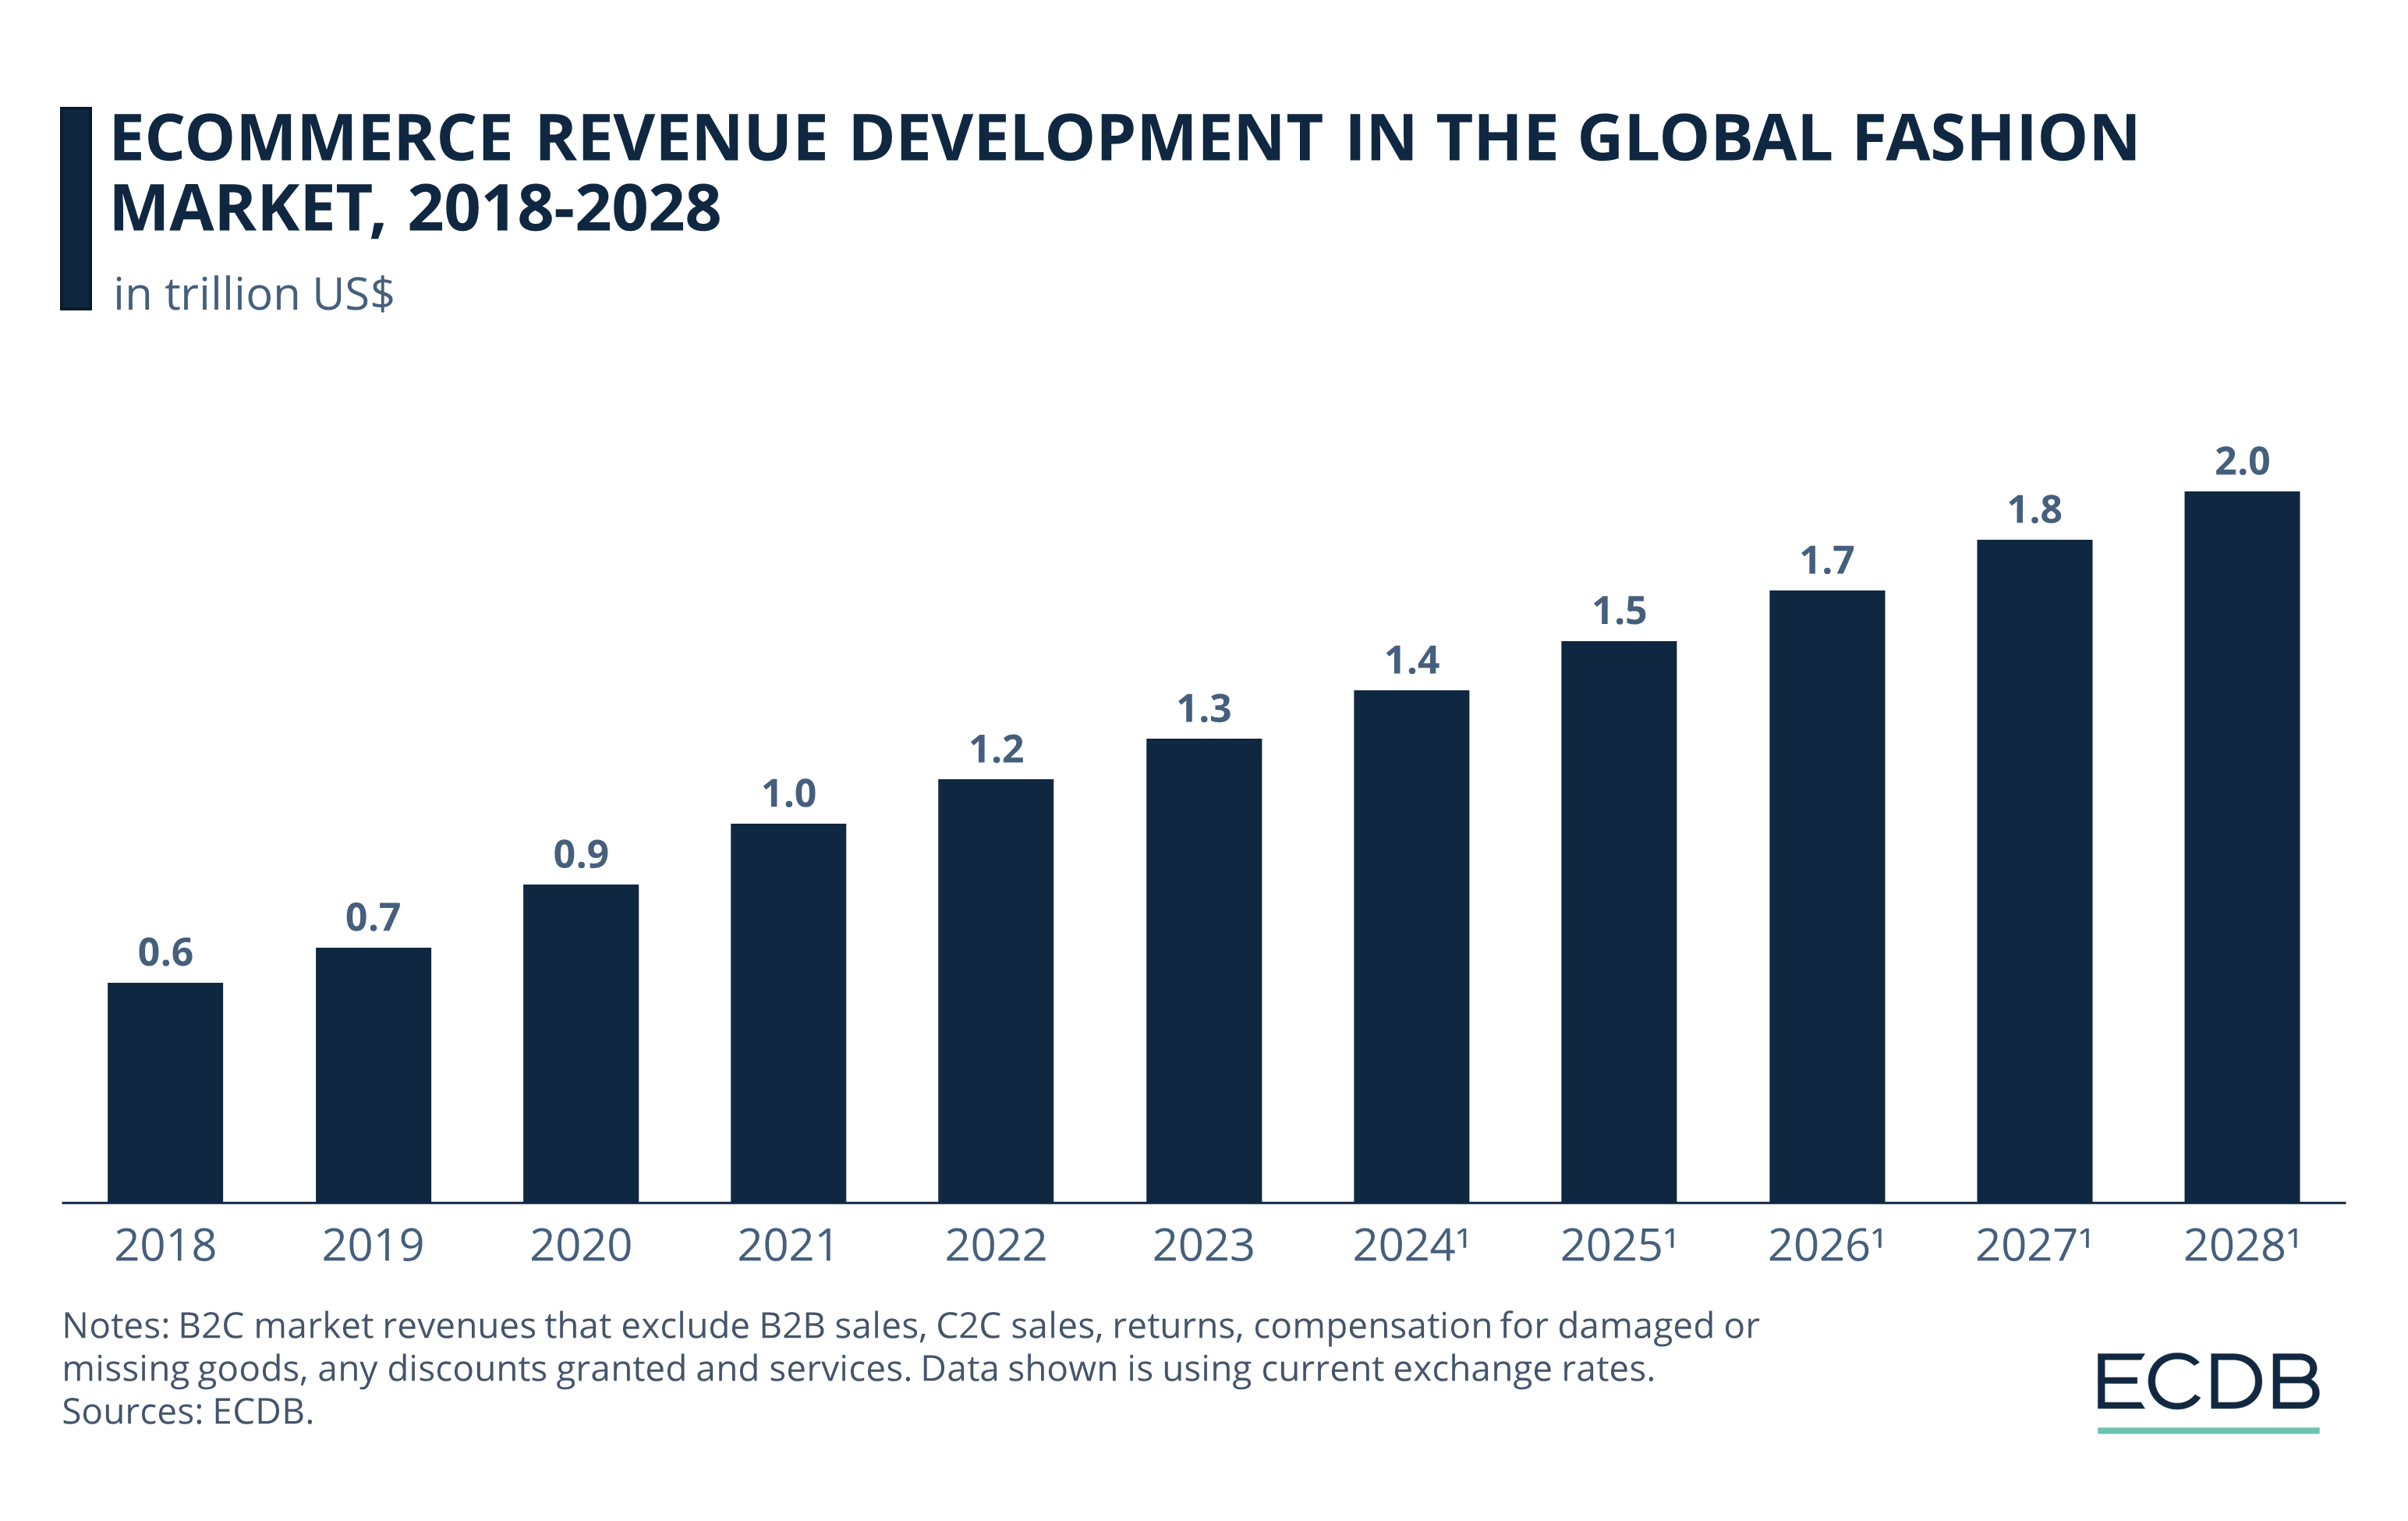 eCommerce Revenue Development in the Global Fashion Market, 2018-2028